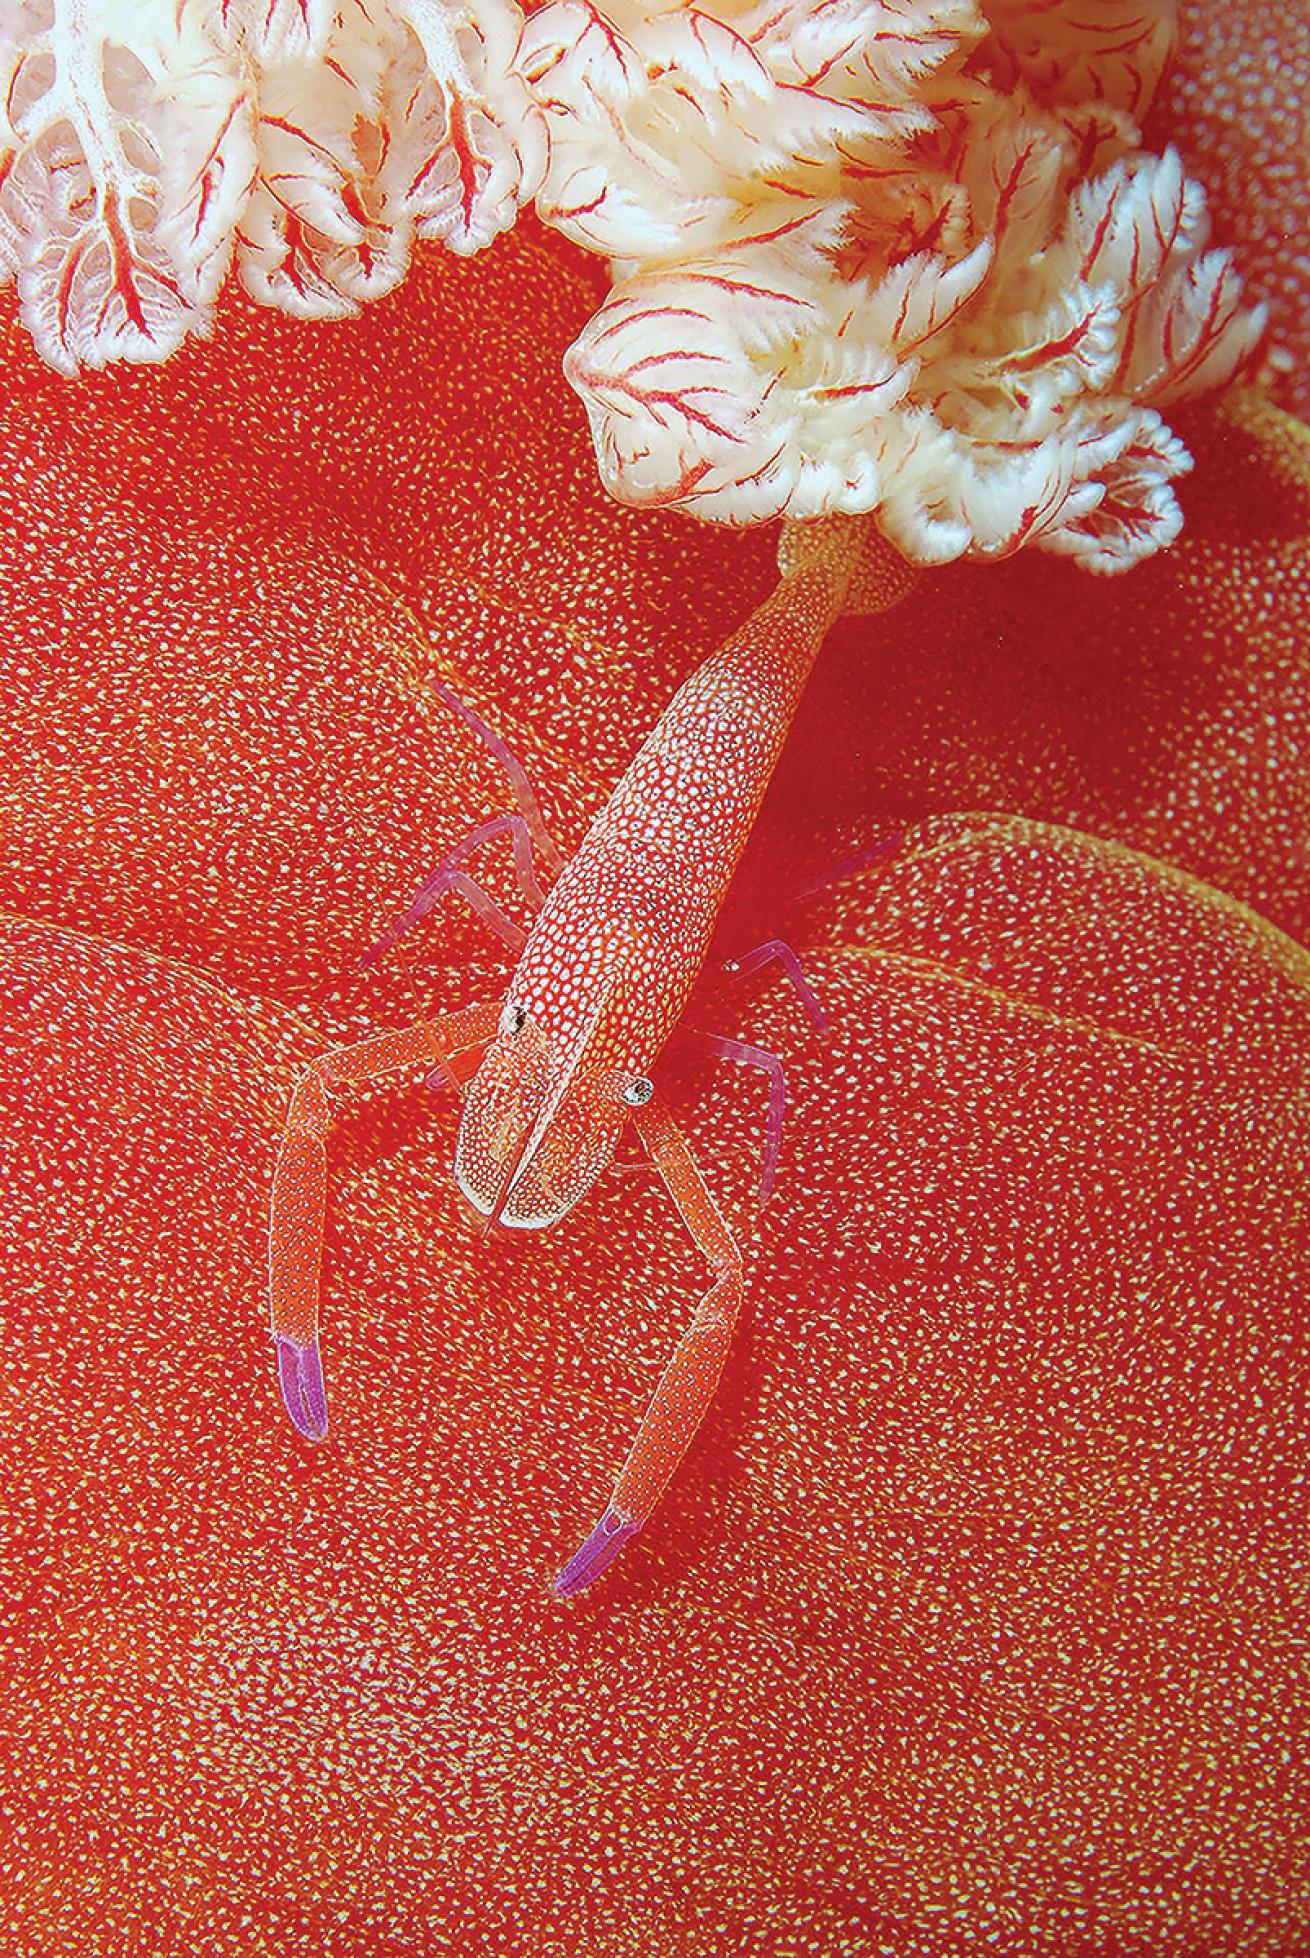 Emperor shrimp on Spanish Dancer nudibranch